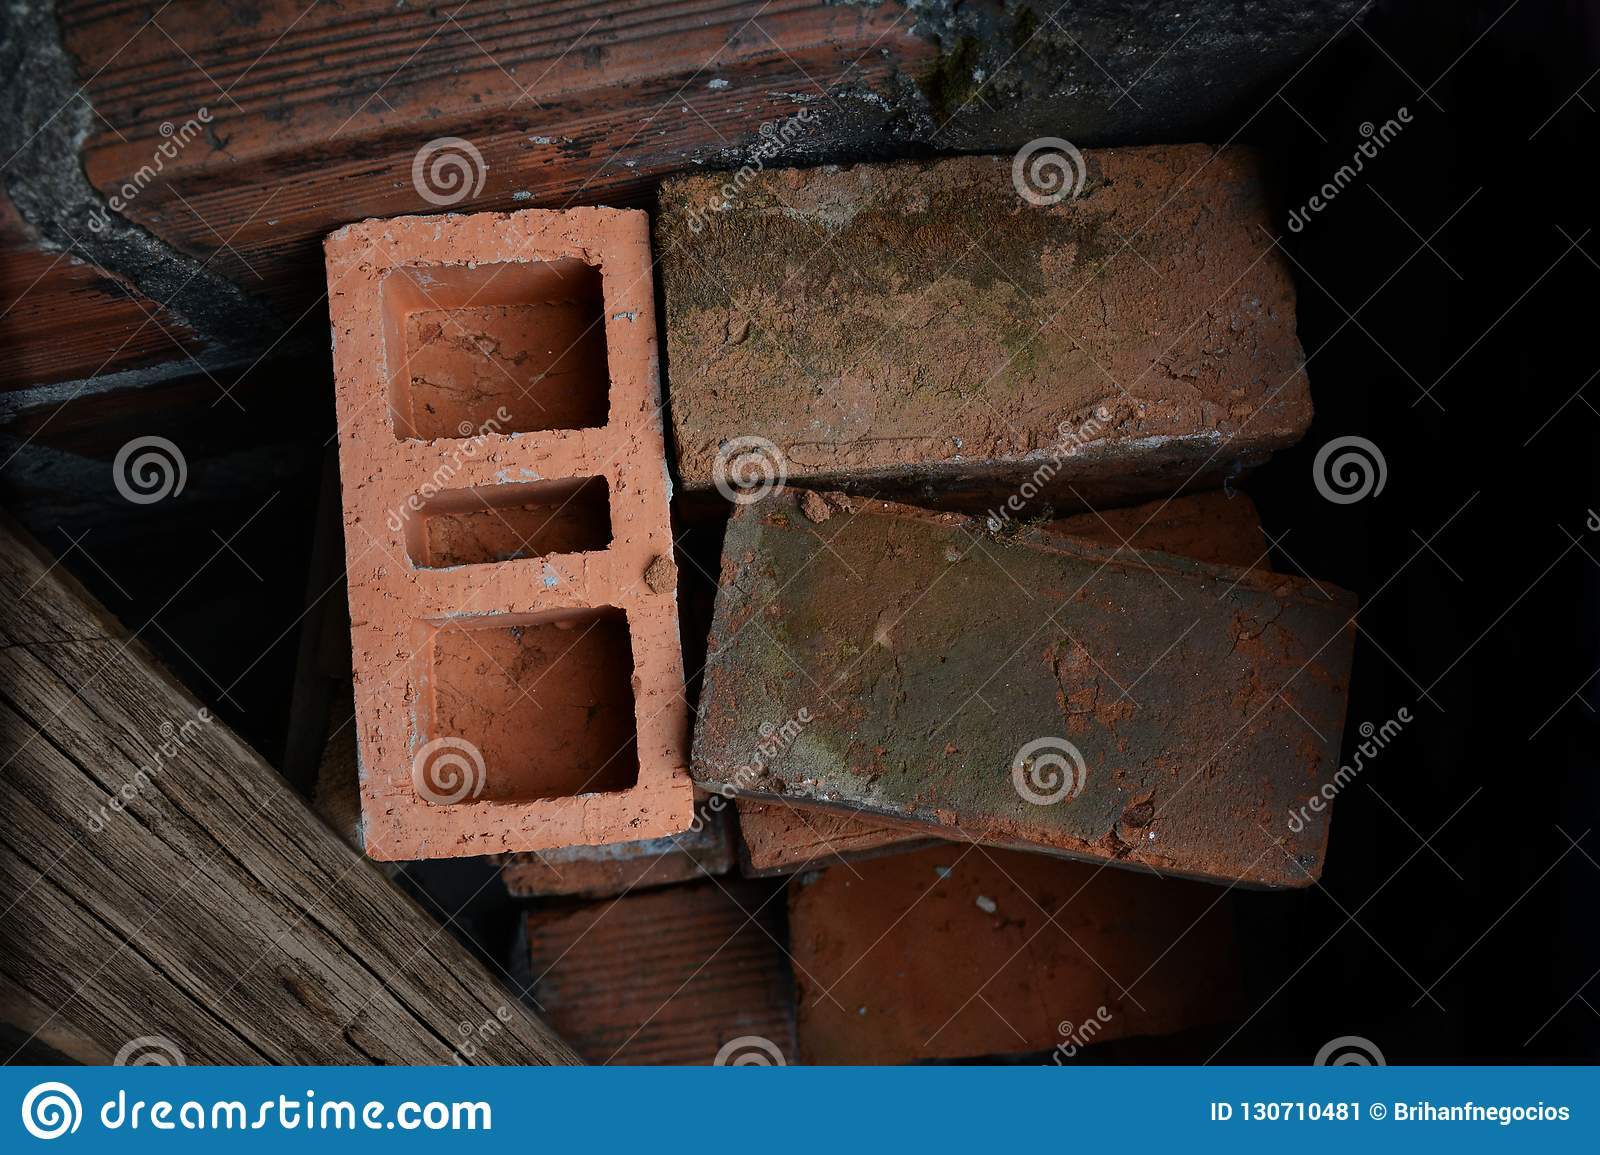 building bricks photograph shows construction elements stack specific orange wooden board